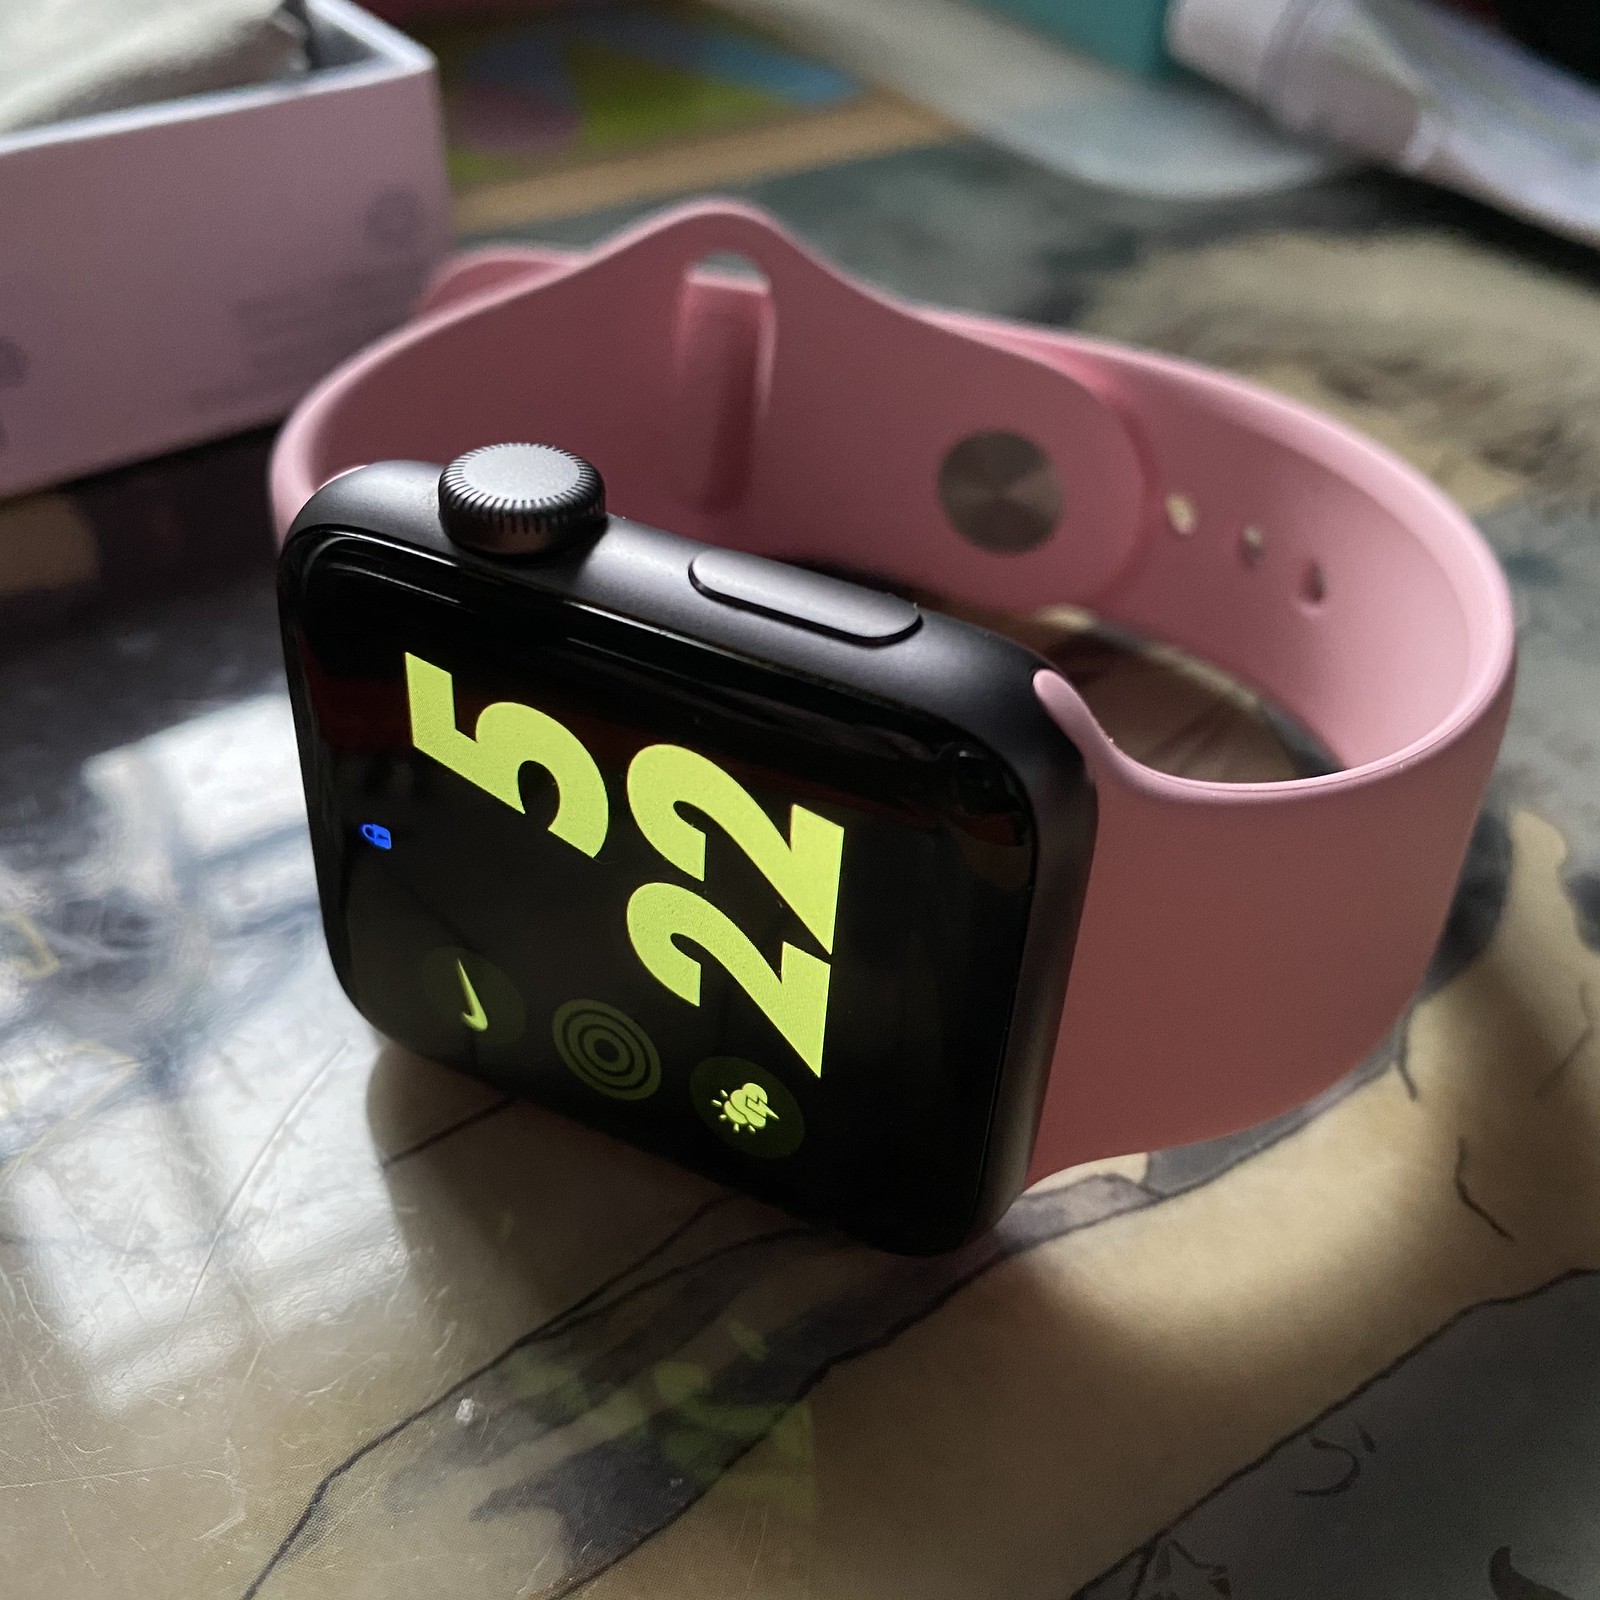 MacRyu.com: Can you pair Apple Watch Series 2, 1, 0 with iOS 14 